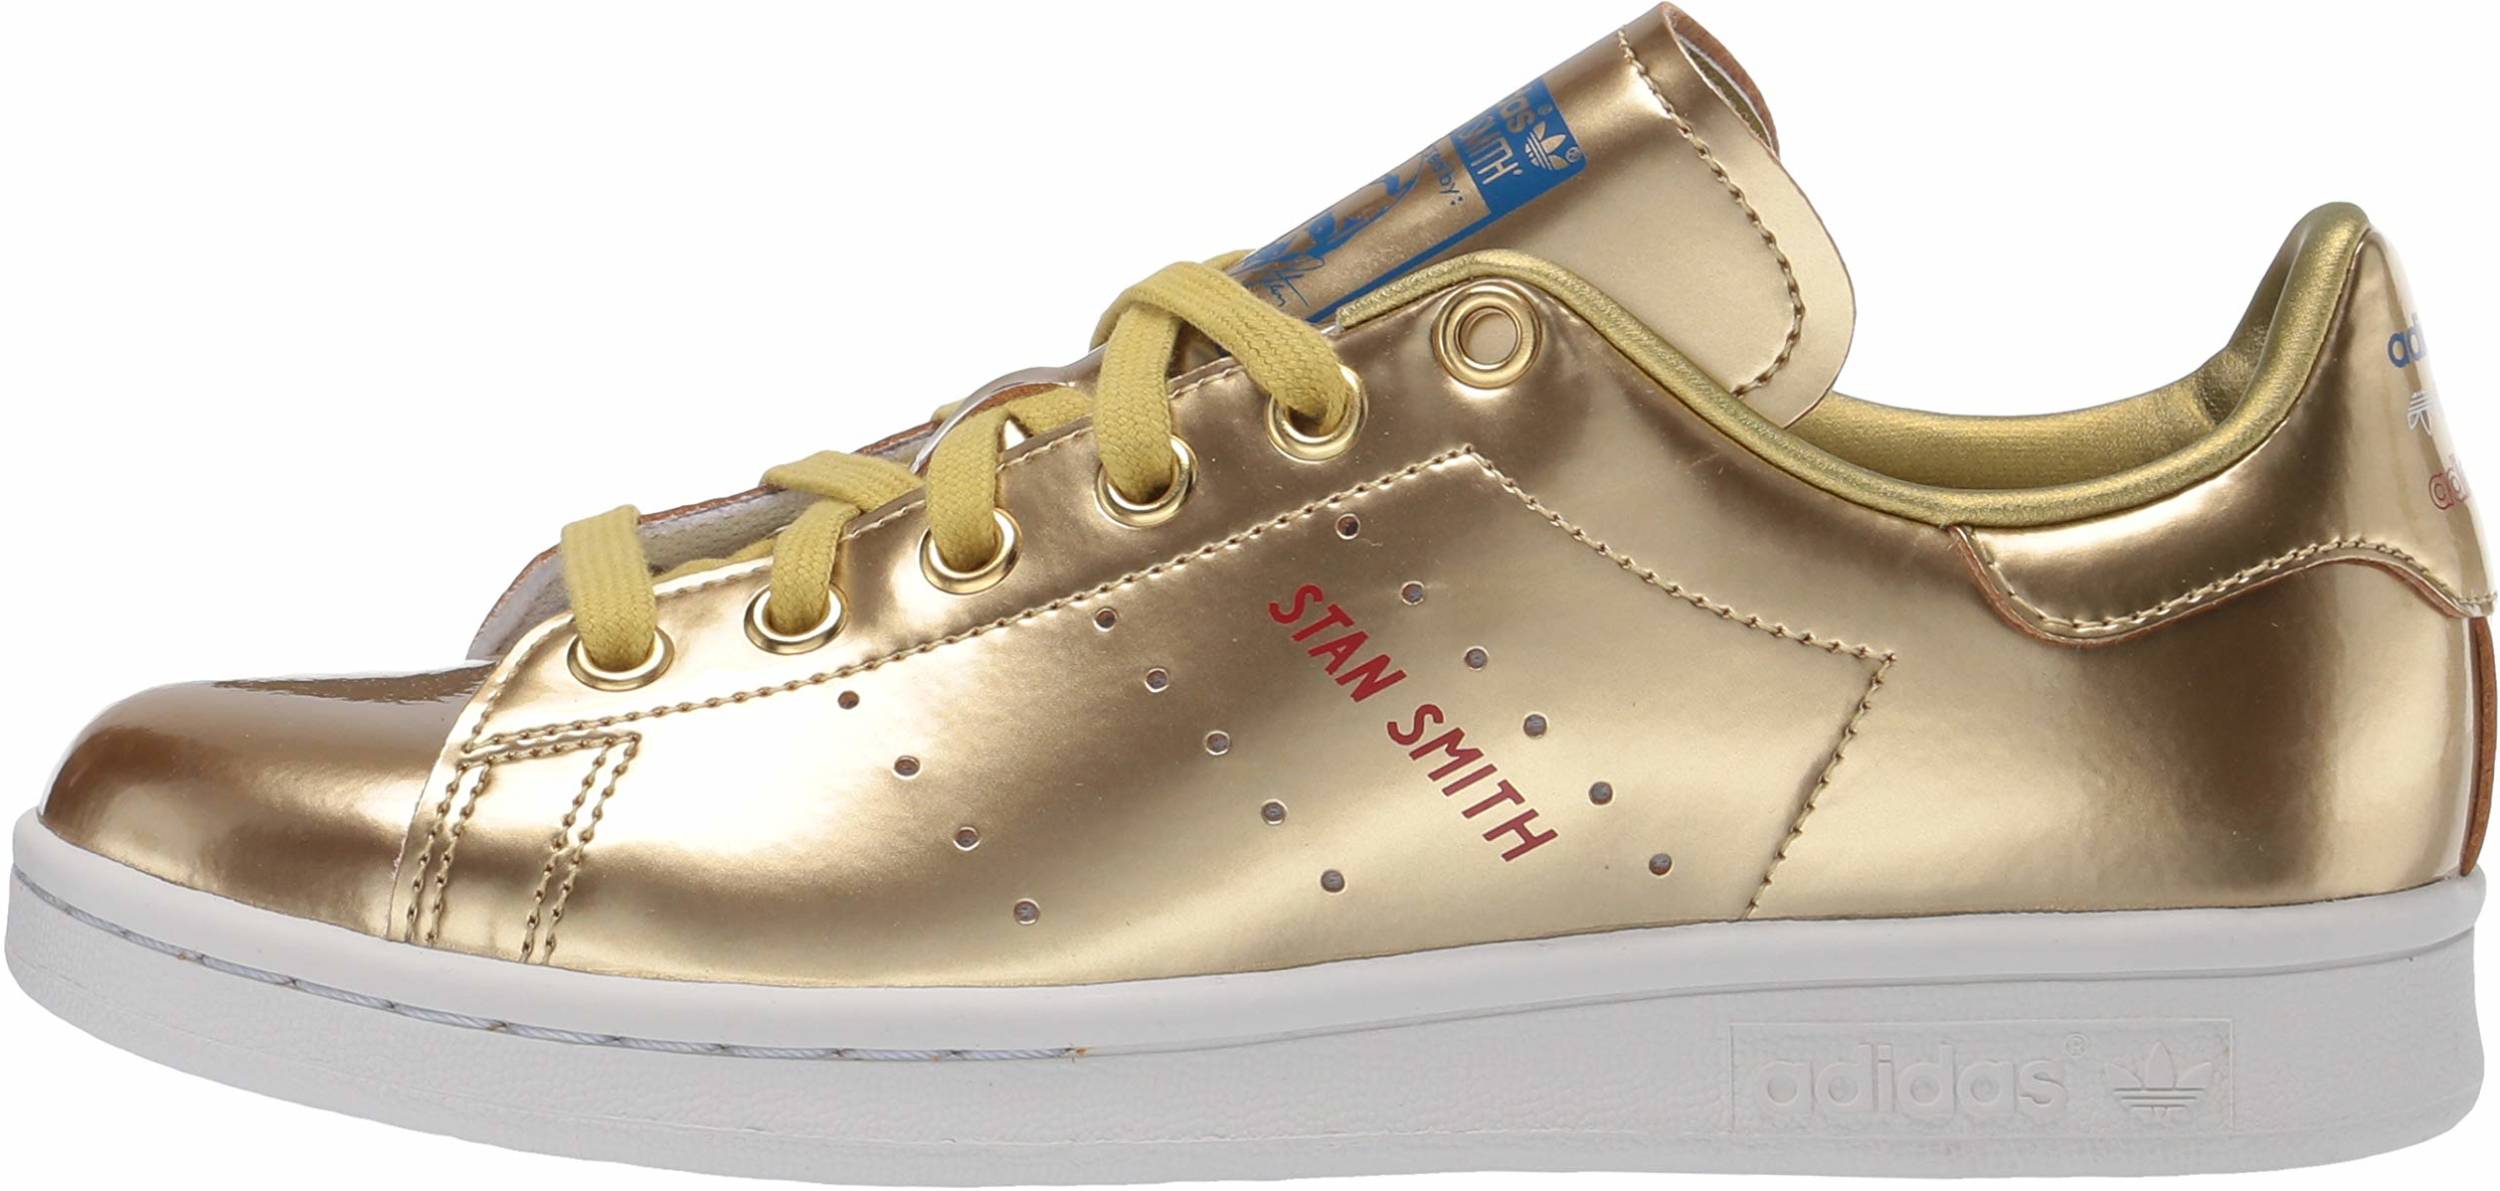 adidas gold shoes mens